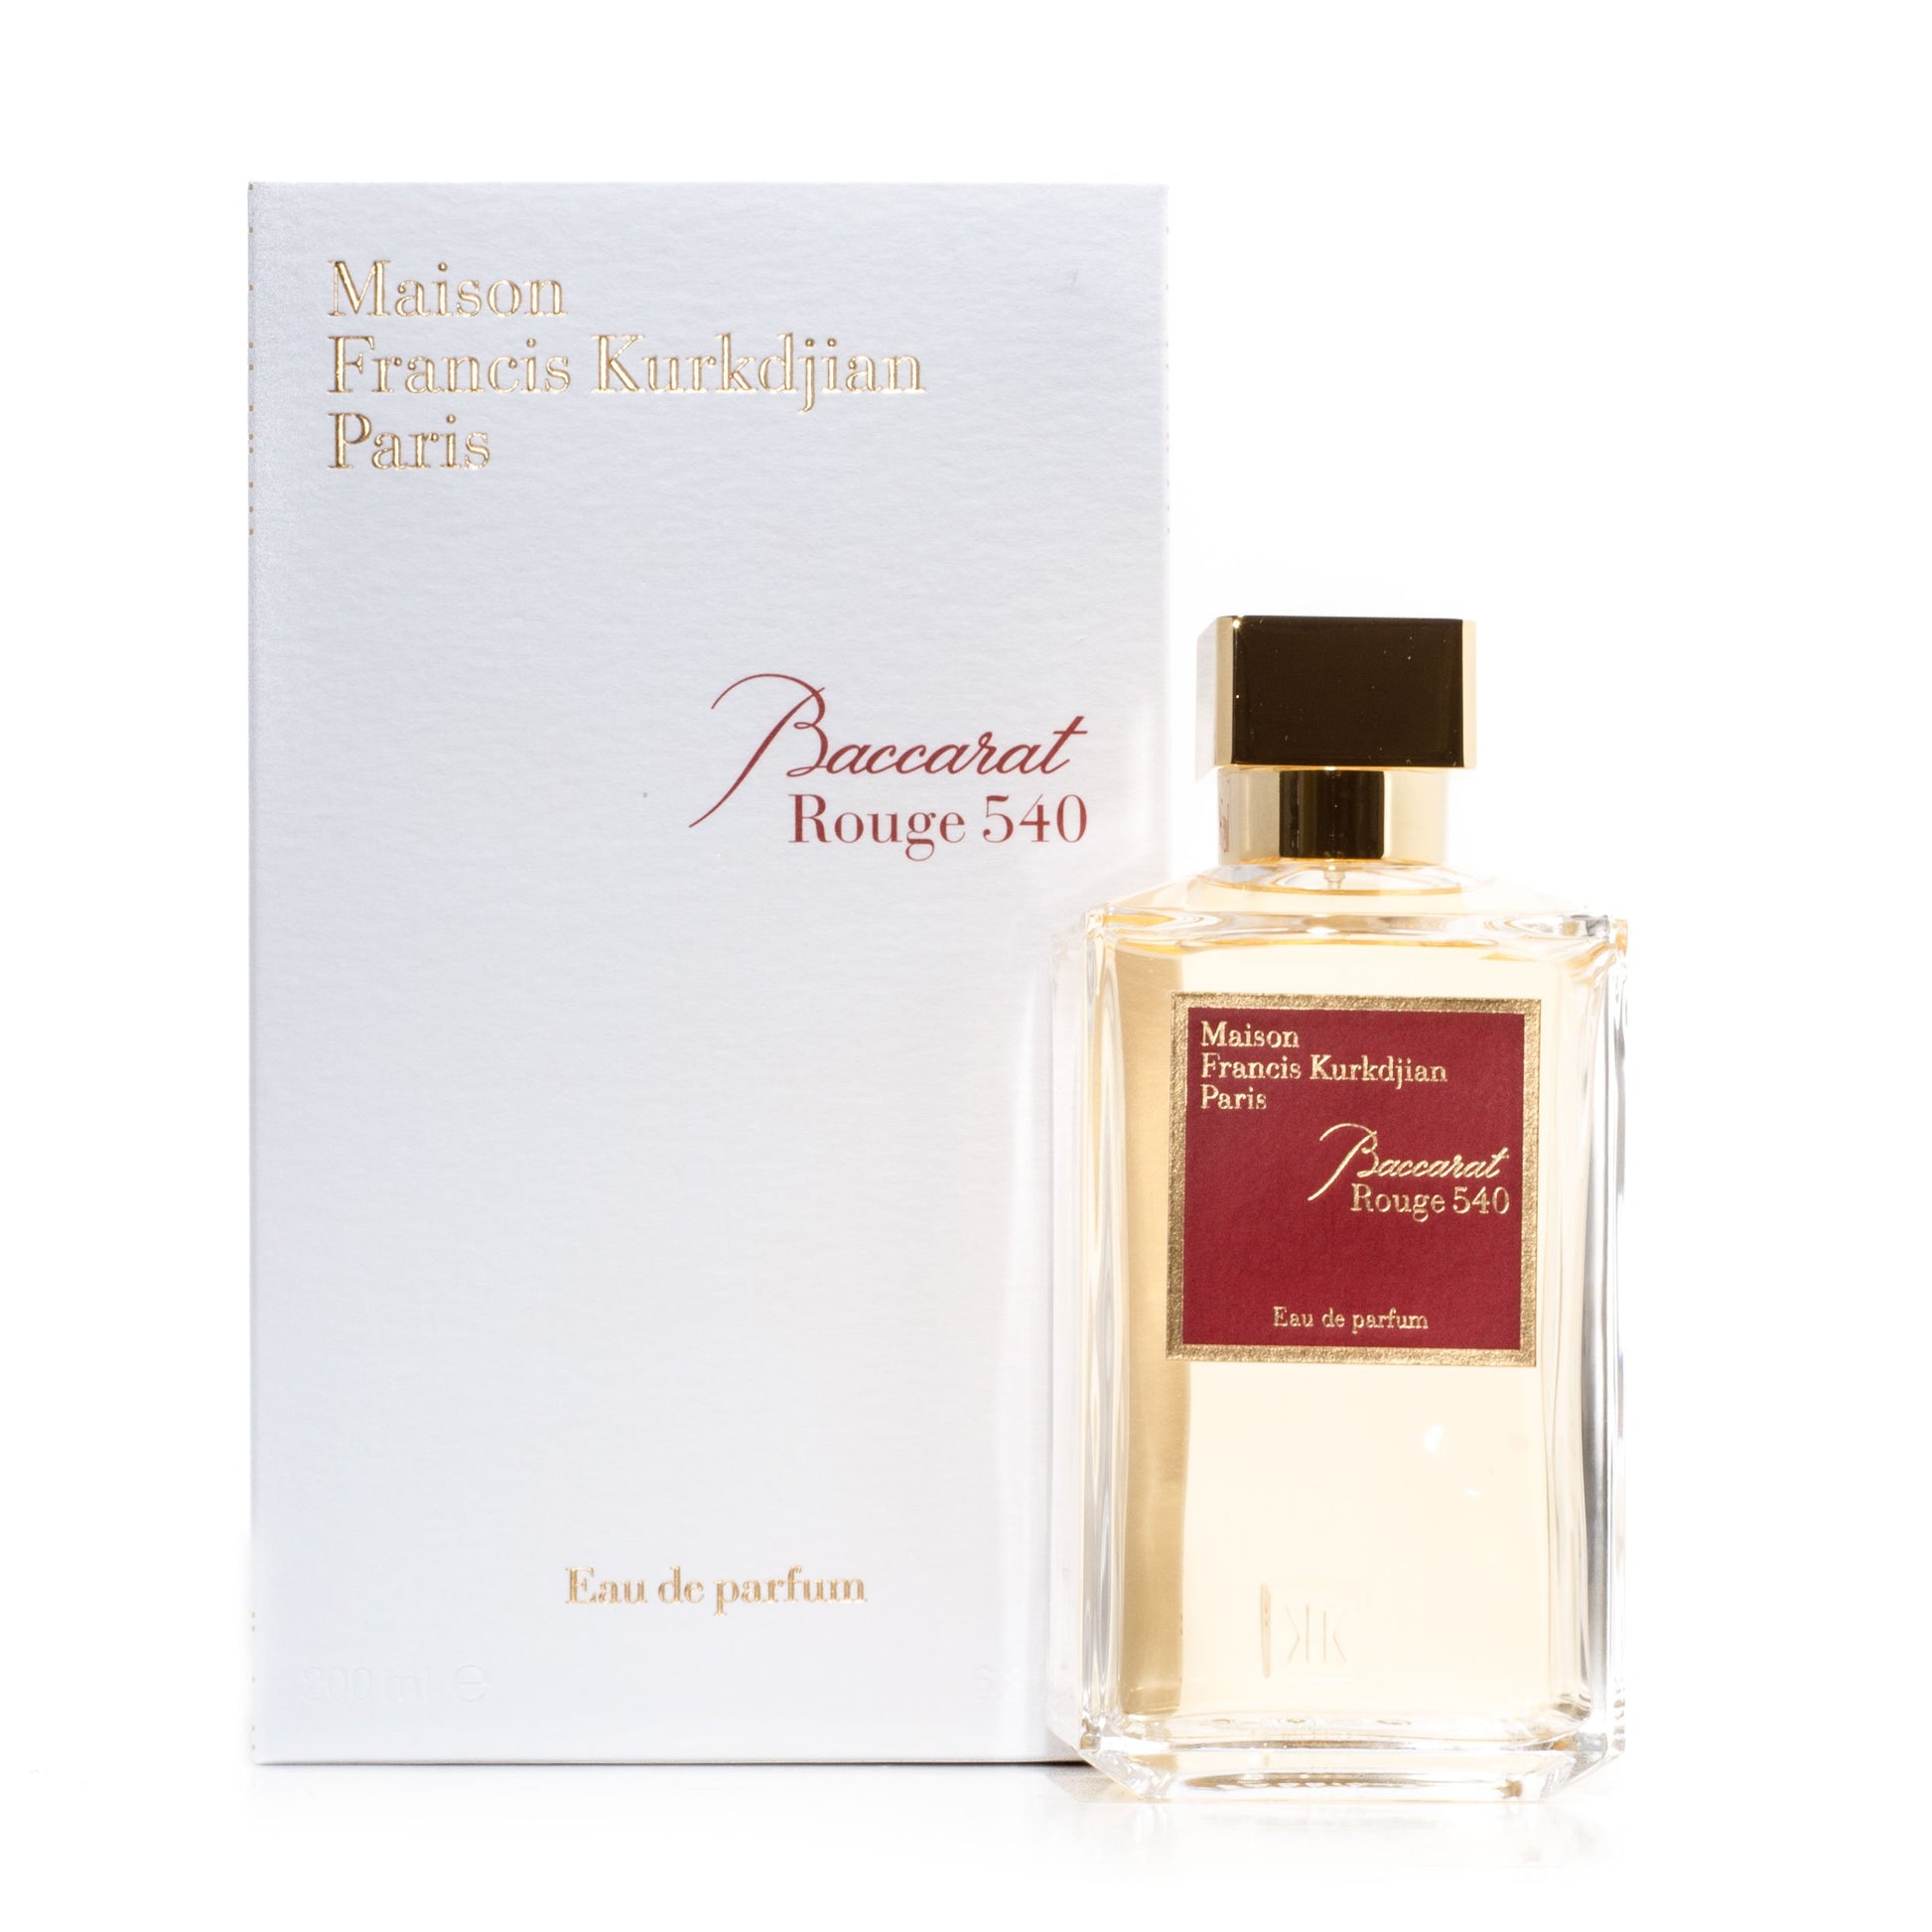 Baccarat Rouge 540 Eau de Parfum Spray for Women and Men by Maison Francis Kurkdjian, Product image 1